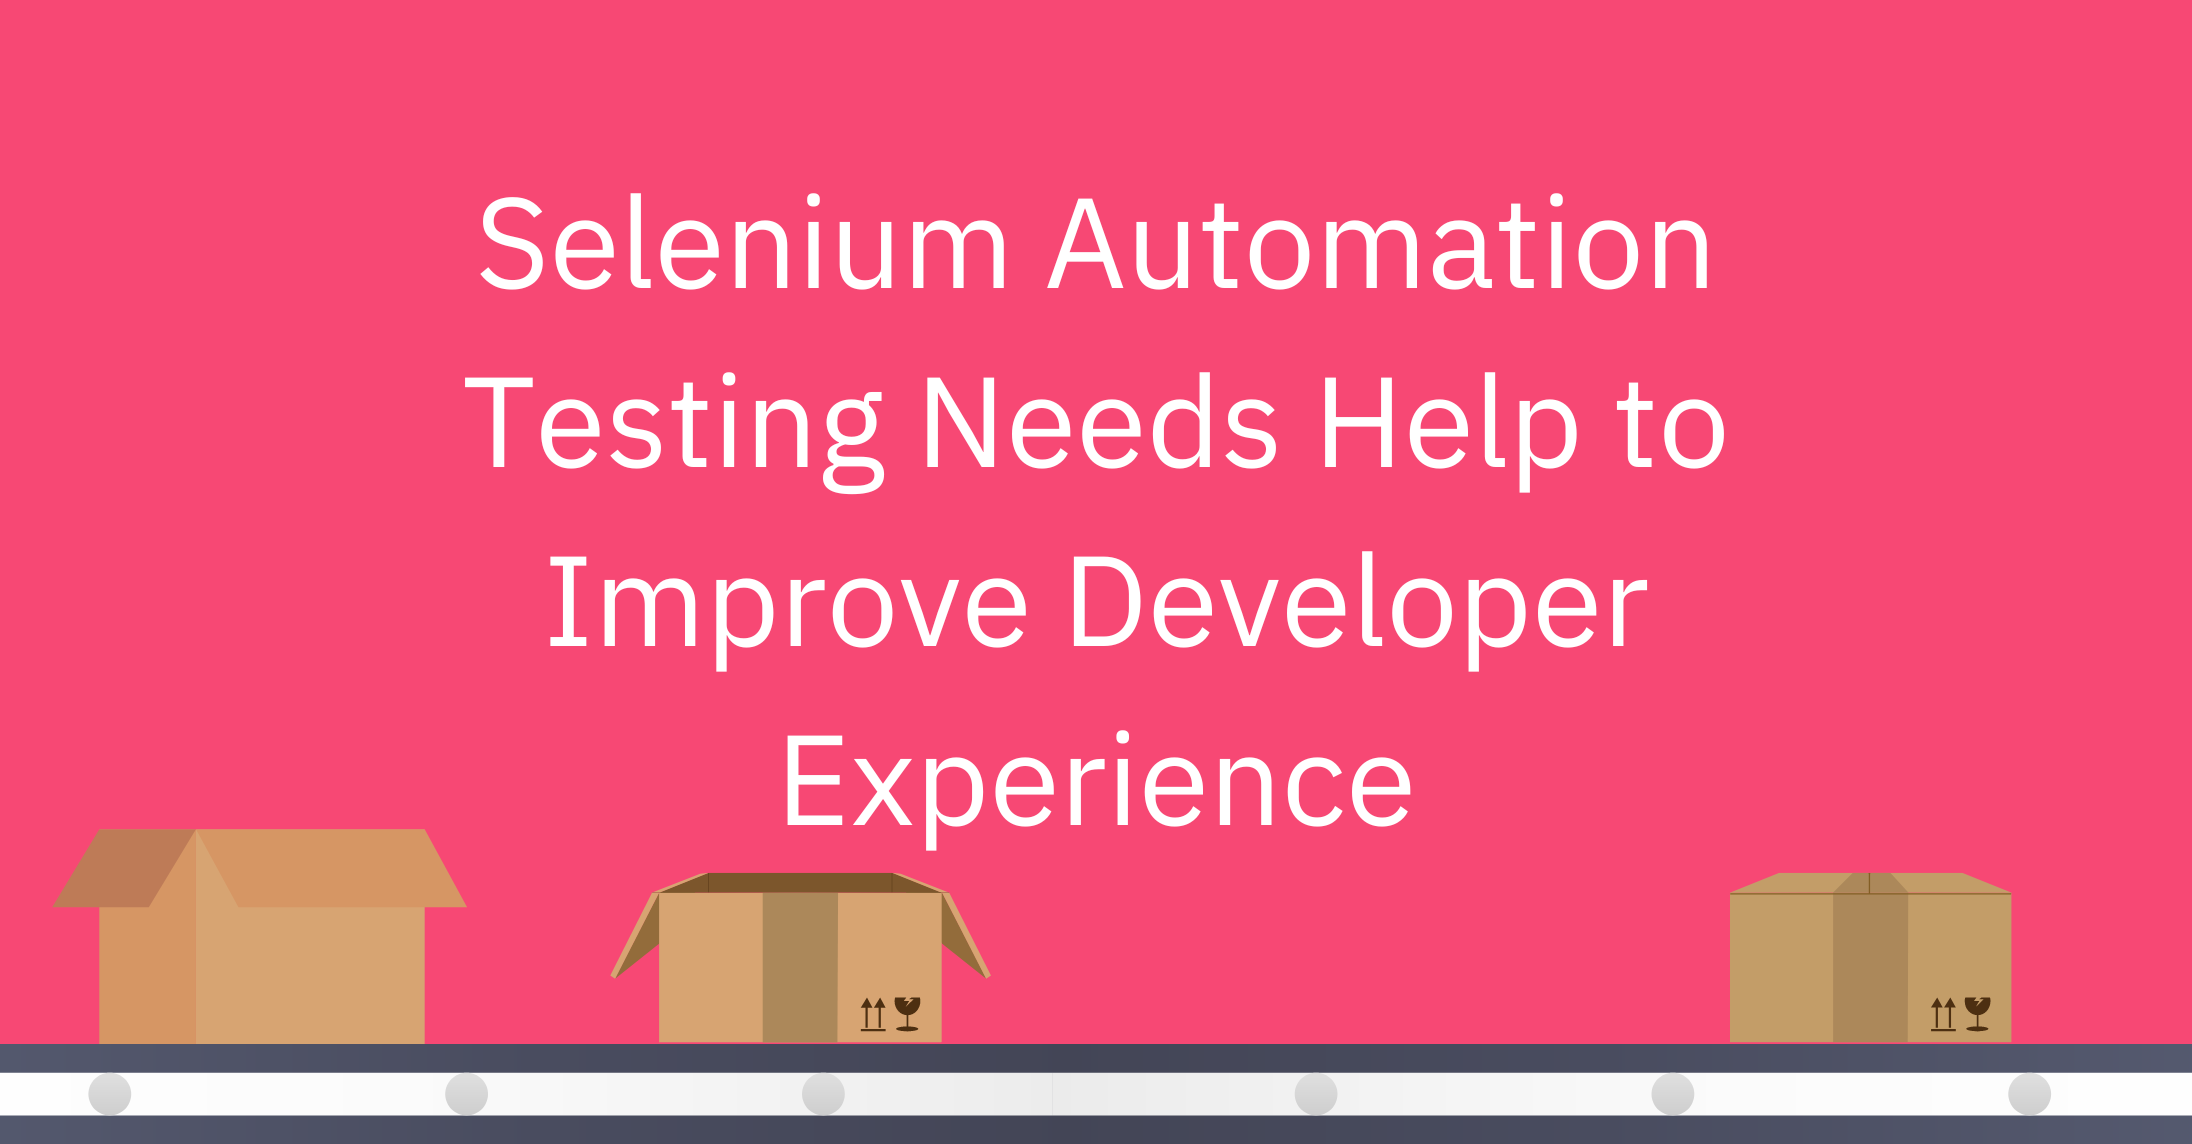 Selenium Automation Testing Needs Help to Improve Developer Experience